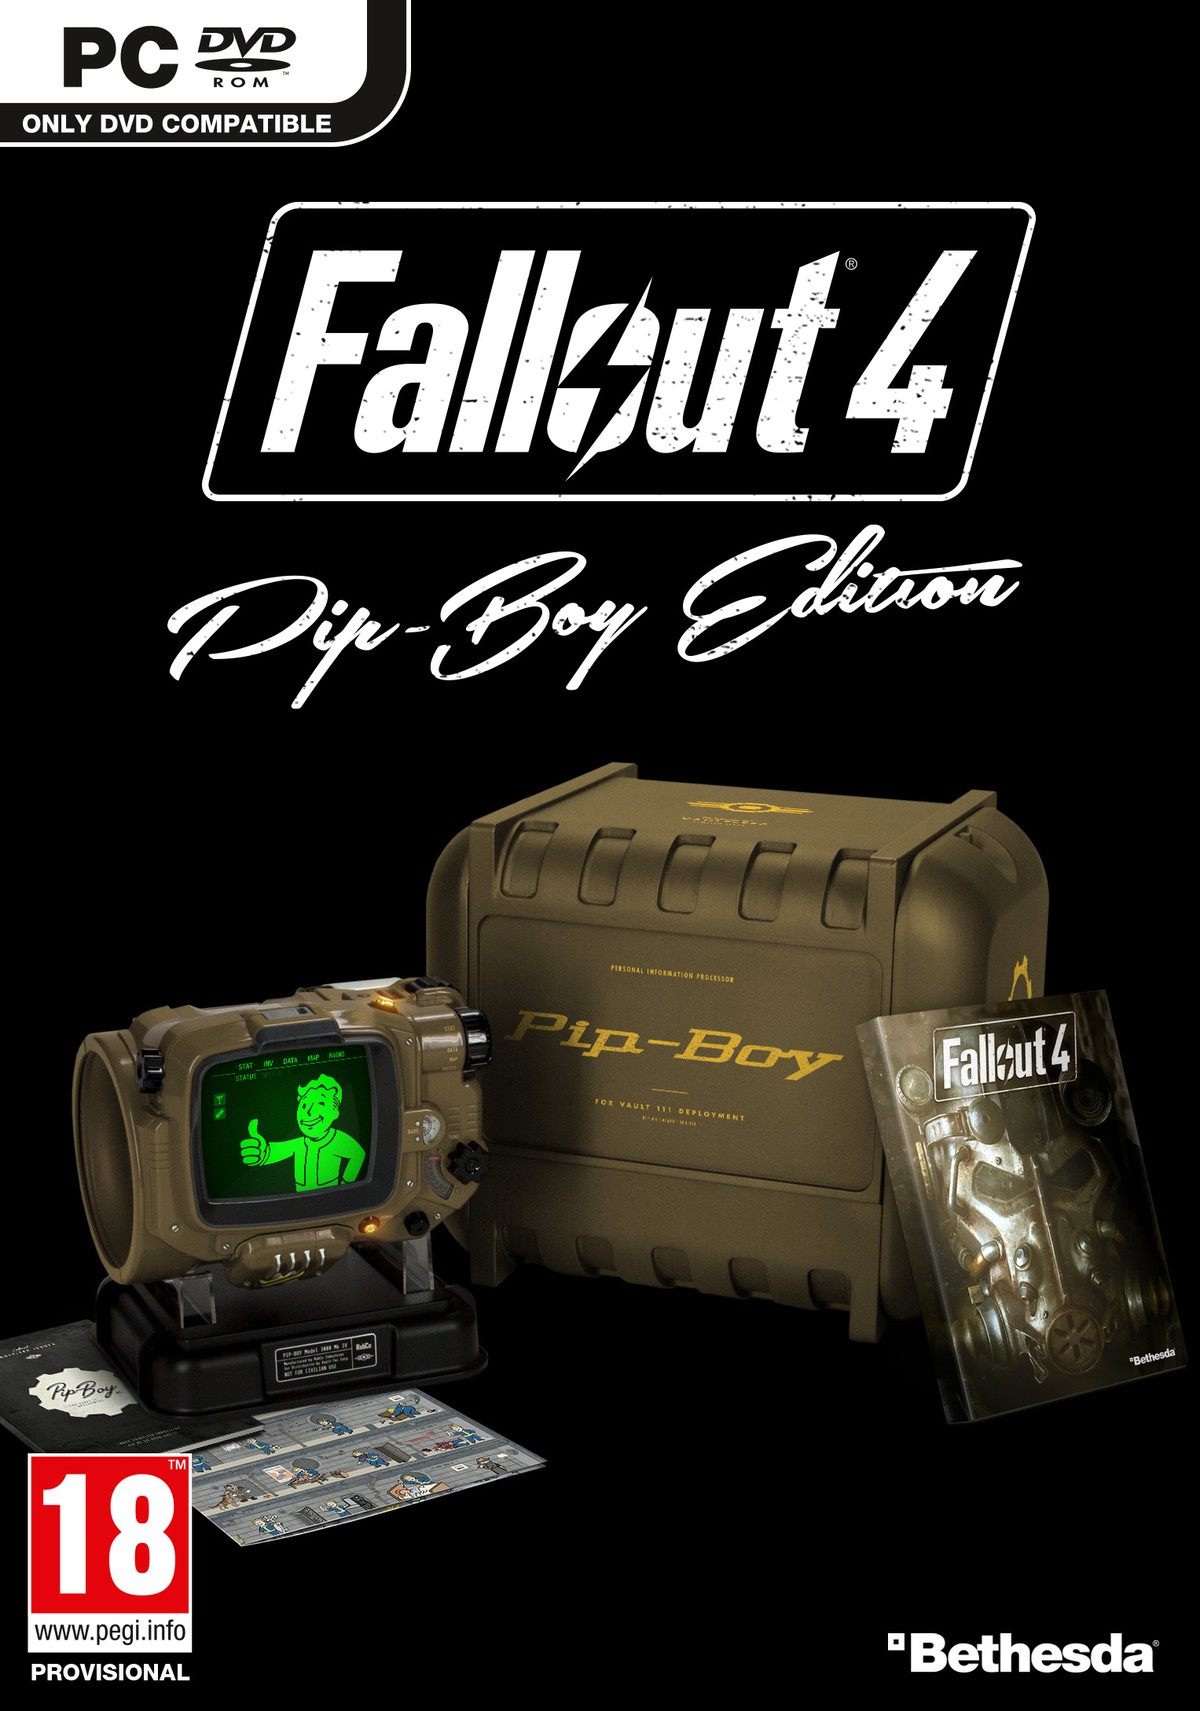 Fallout 4 2015 codex (119) фото